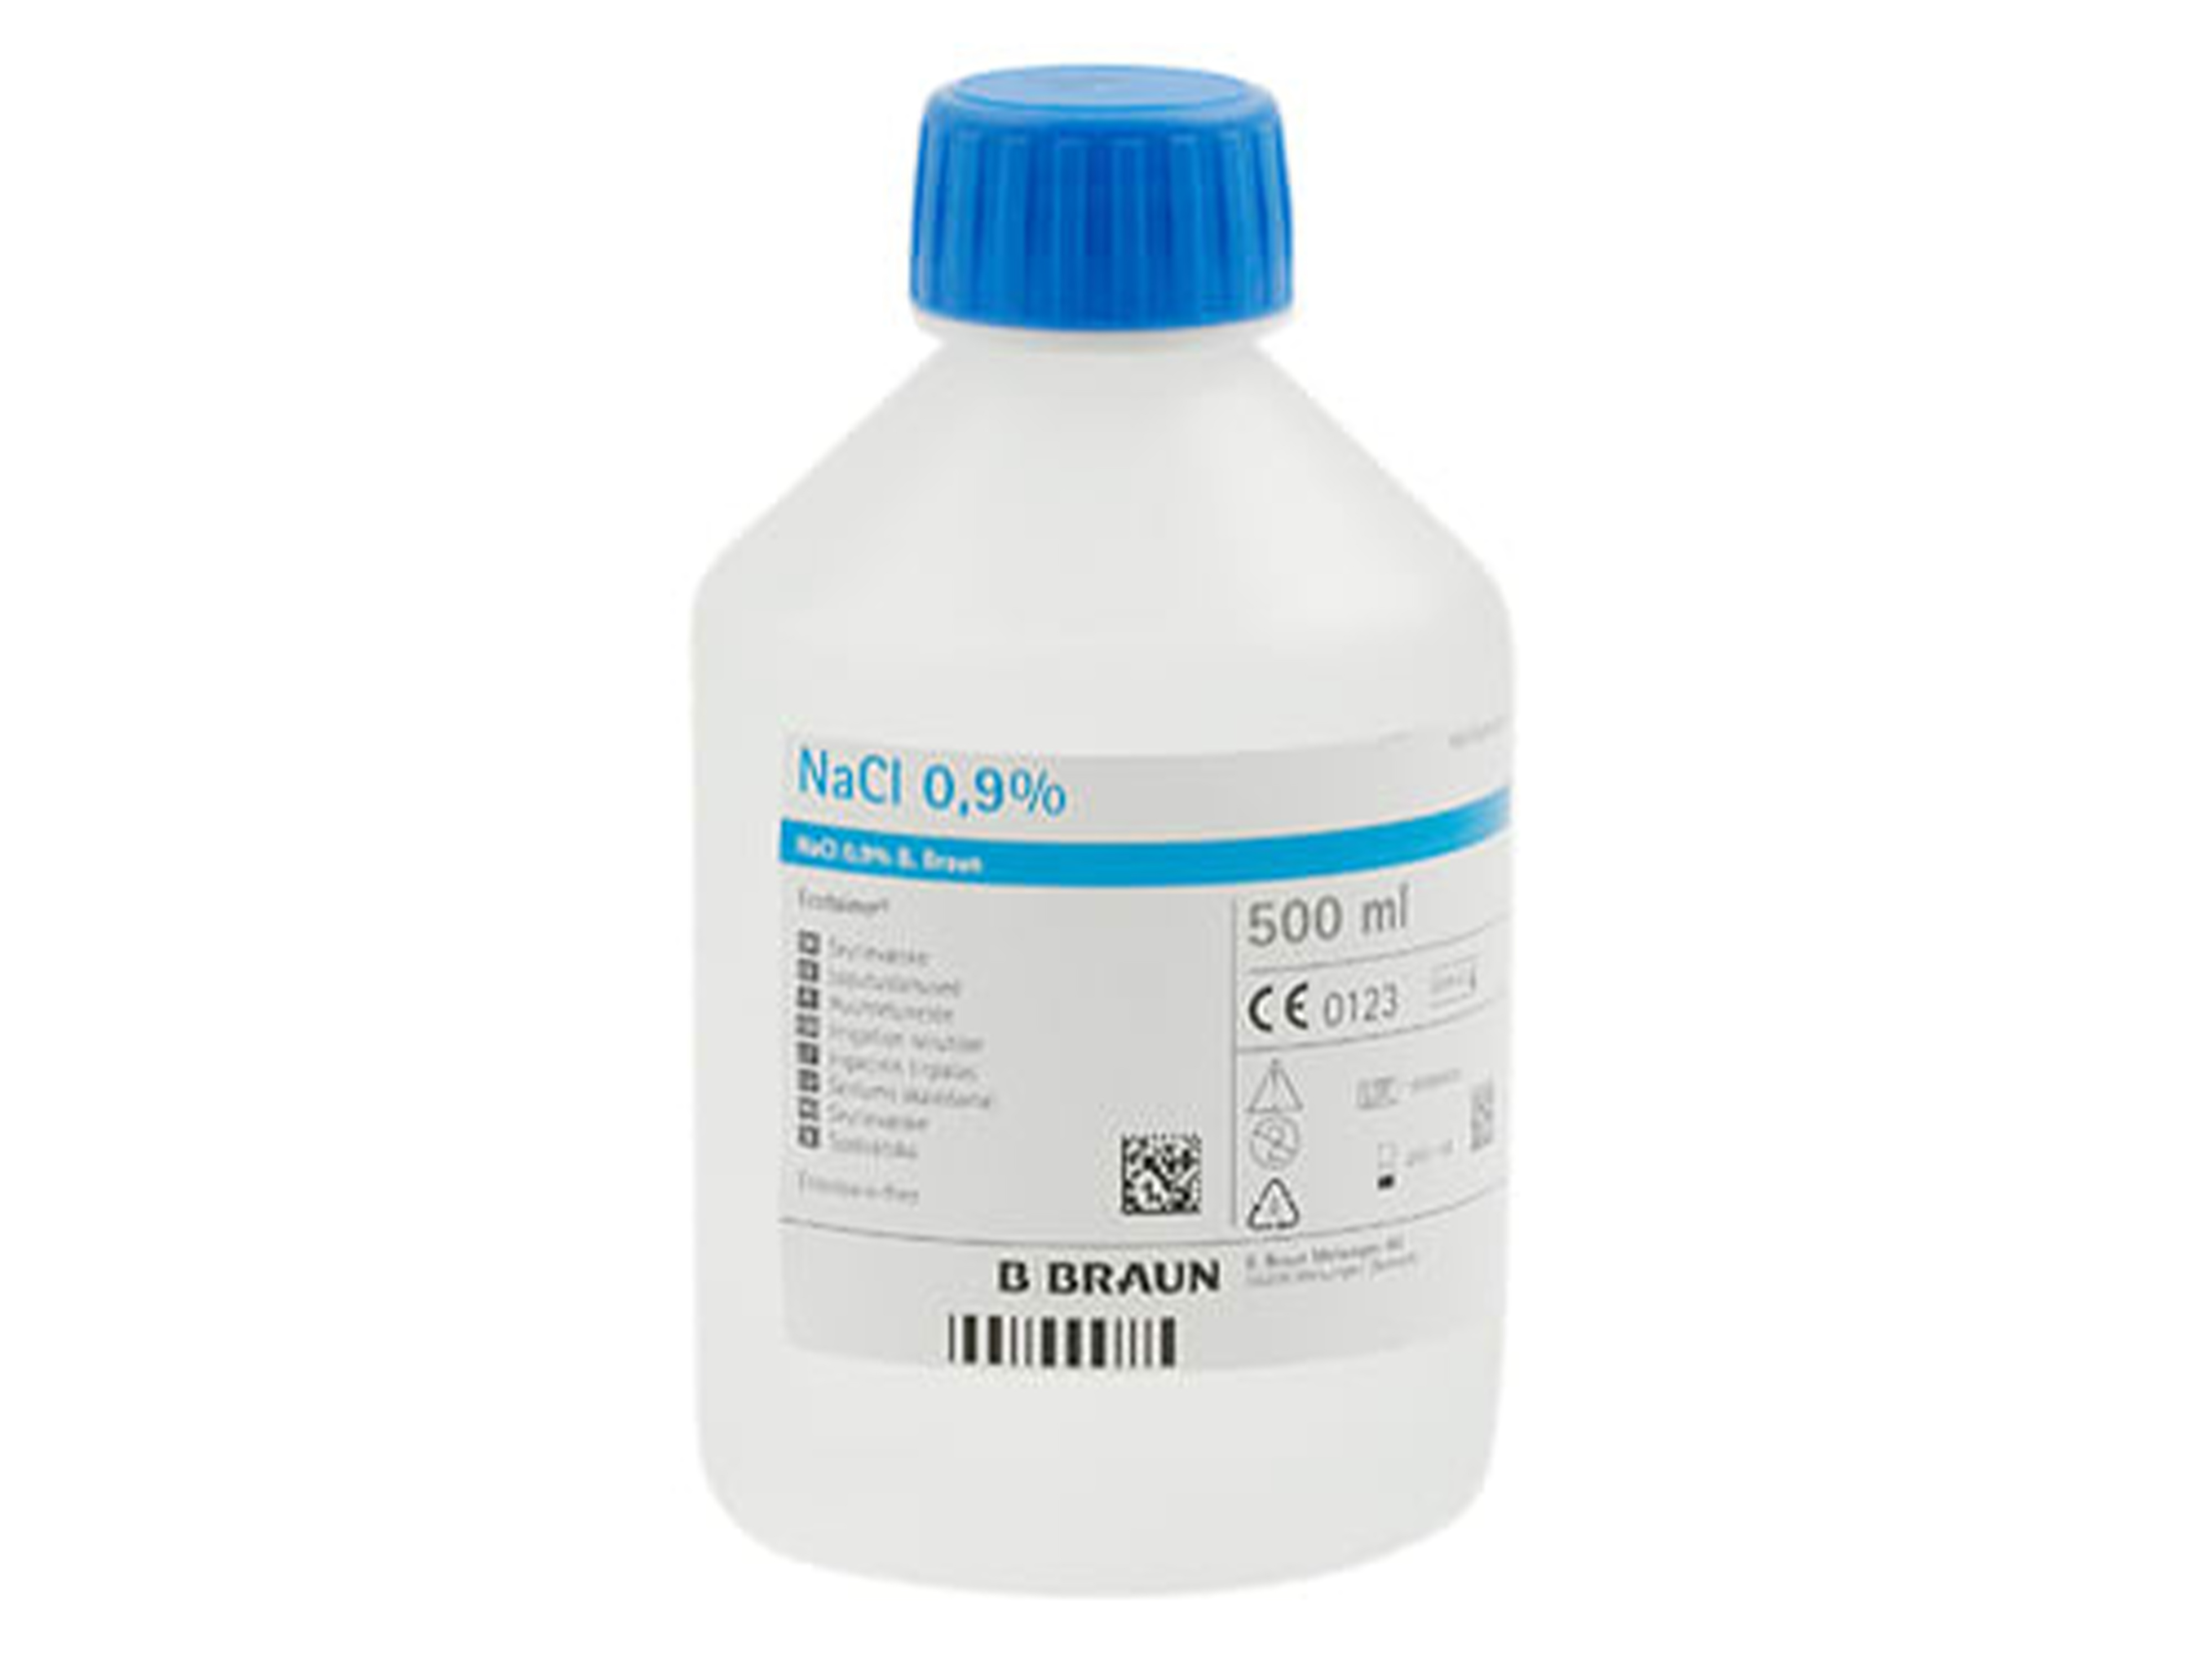 B. Braun Natriumklorid skyllevæske 0,9 % ecotain, 500 ml